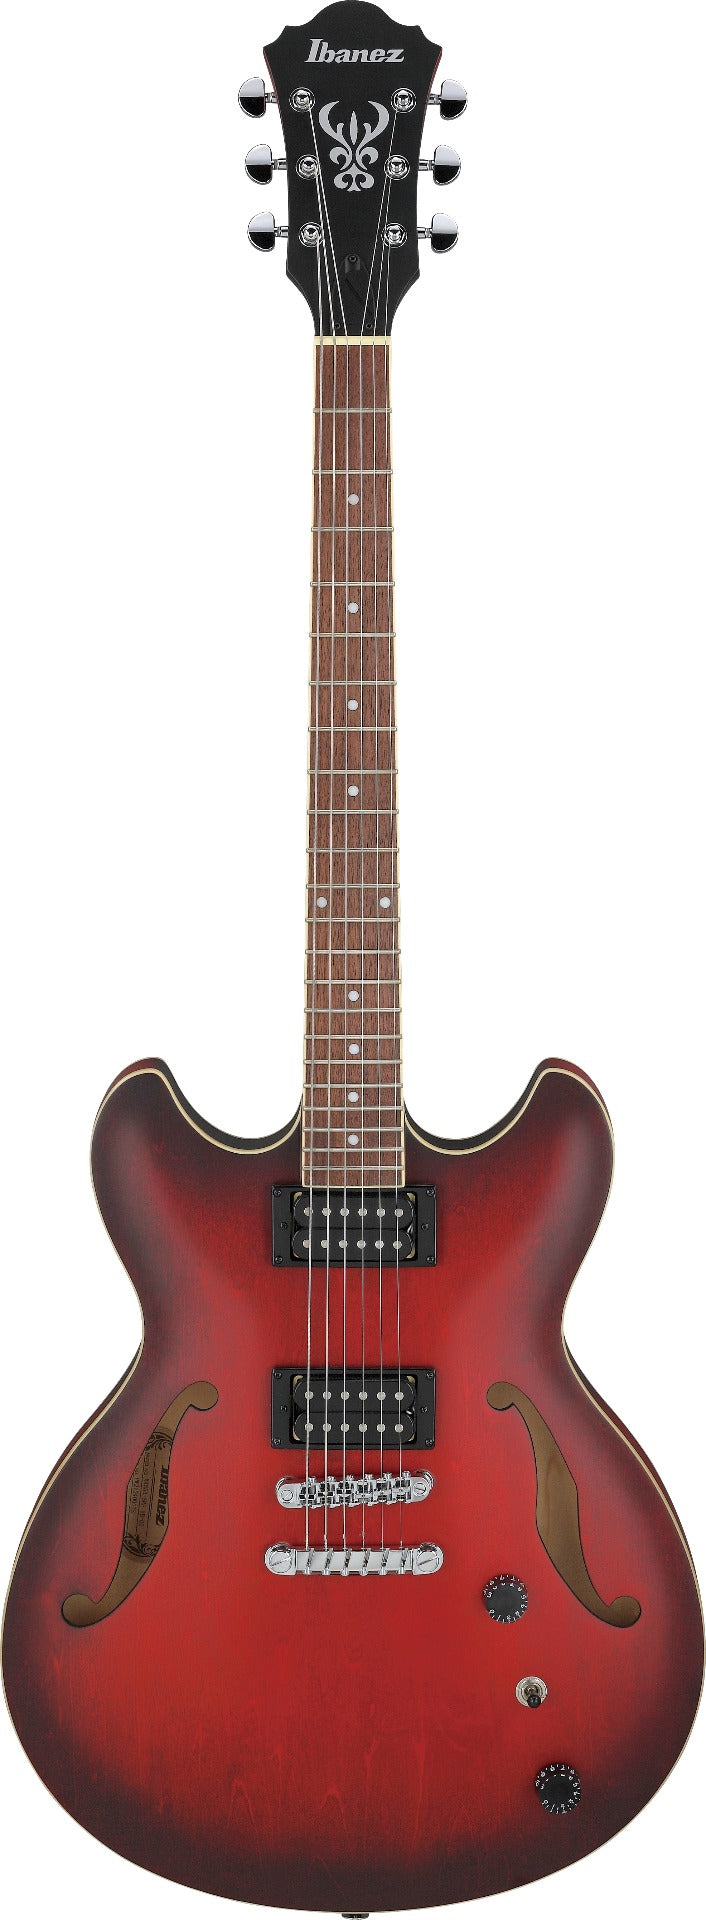 Ibanez AS53SRF AS Artcore Semi-Hollow Electric Guitar, Sunburst Red Flat